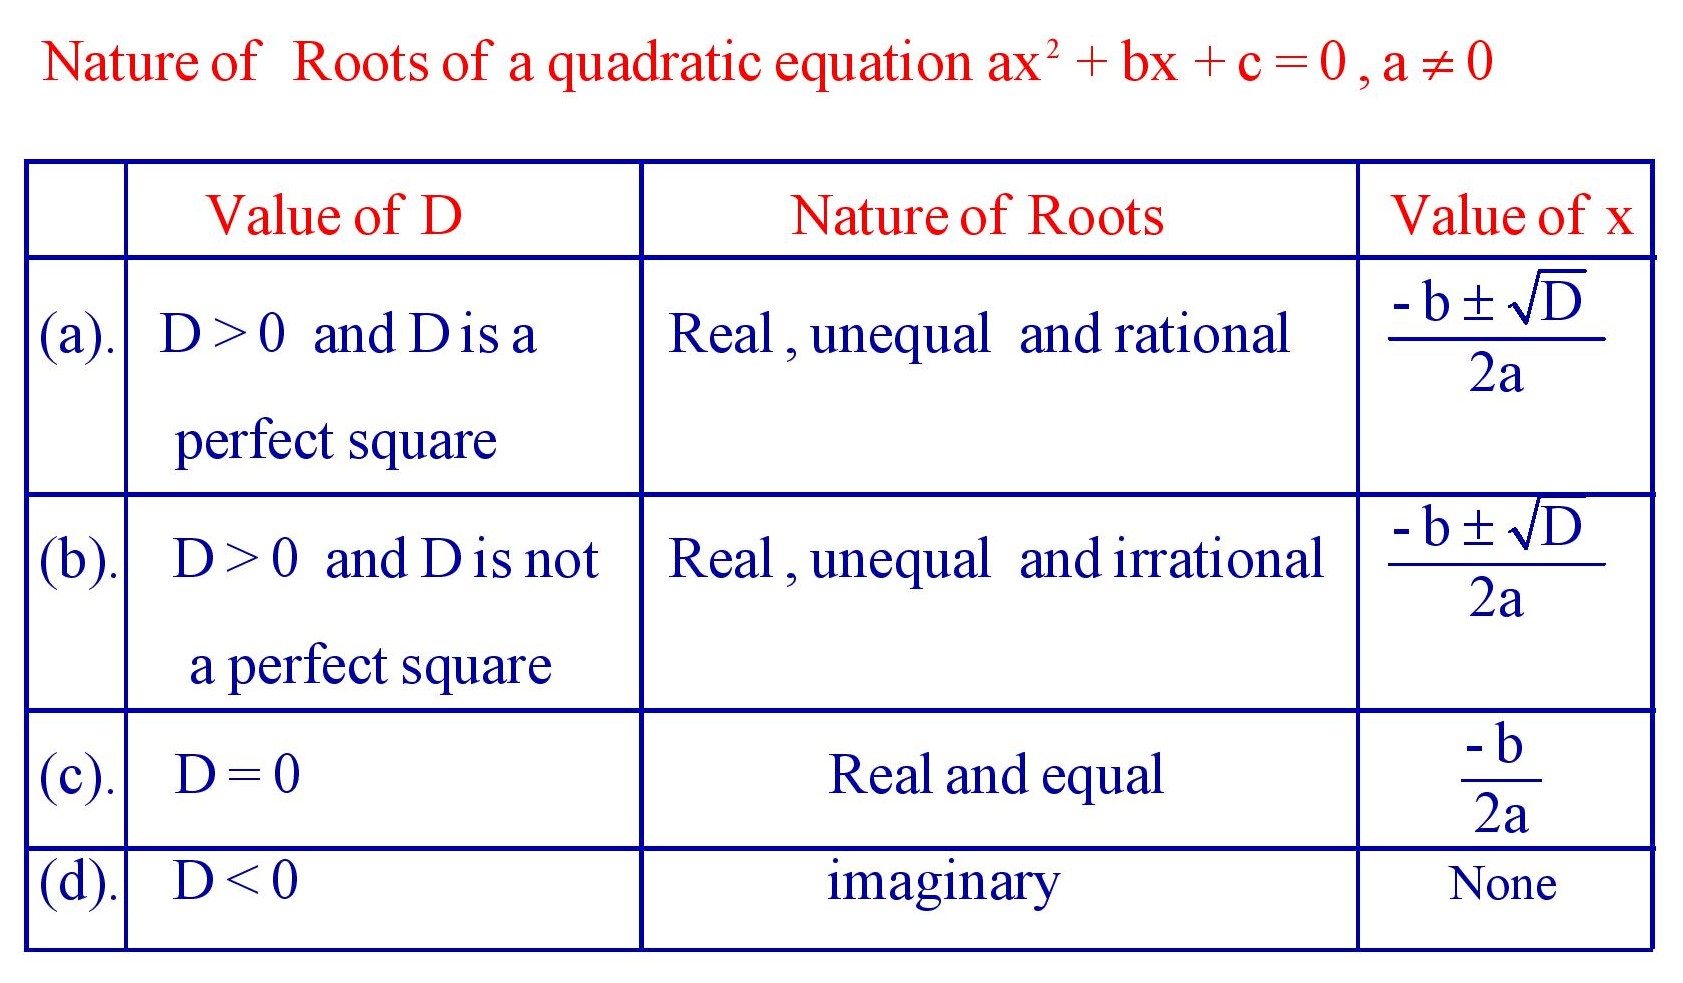 Nature of roots of a quadratic equations